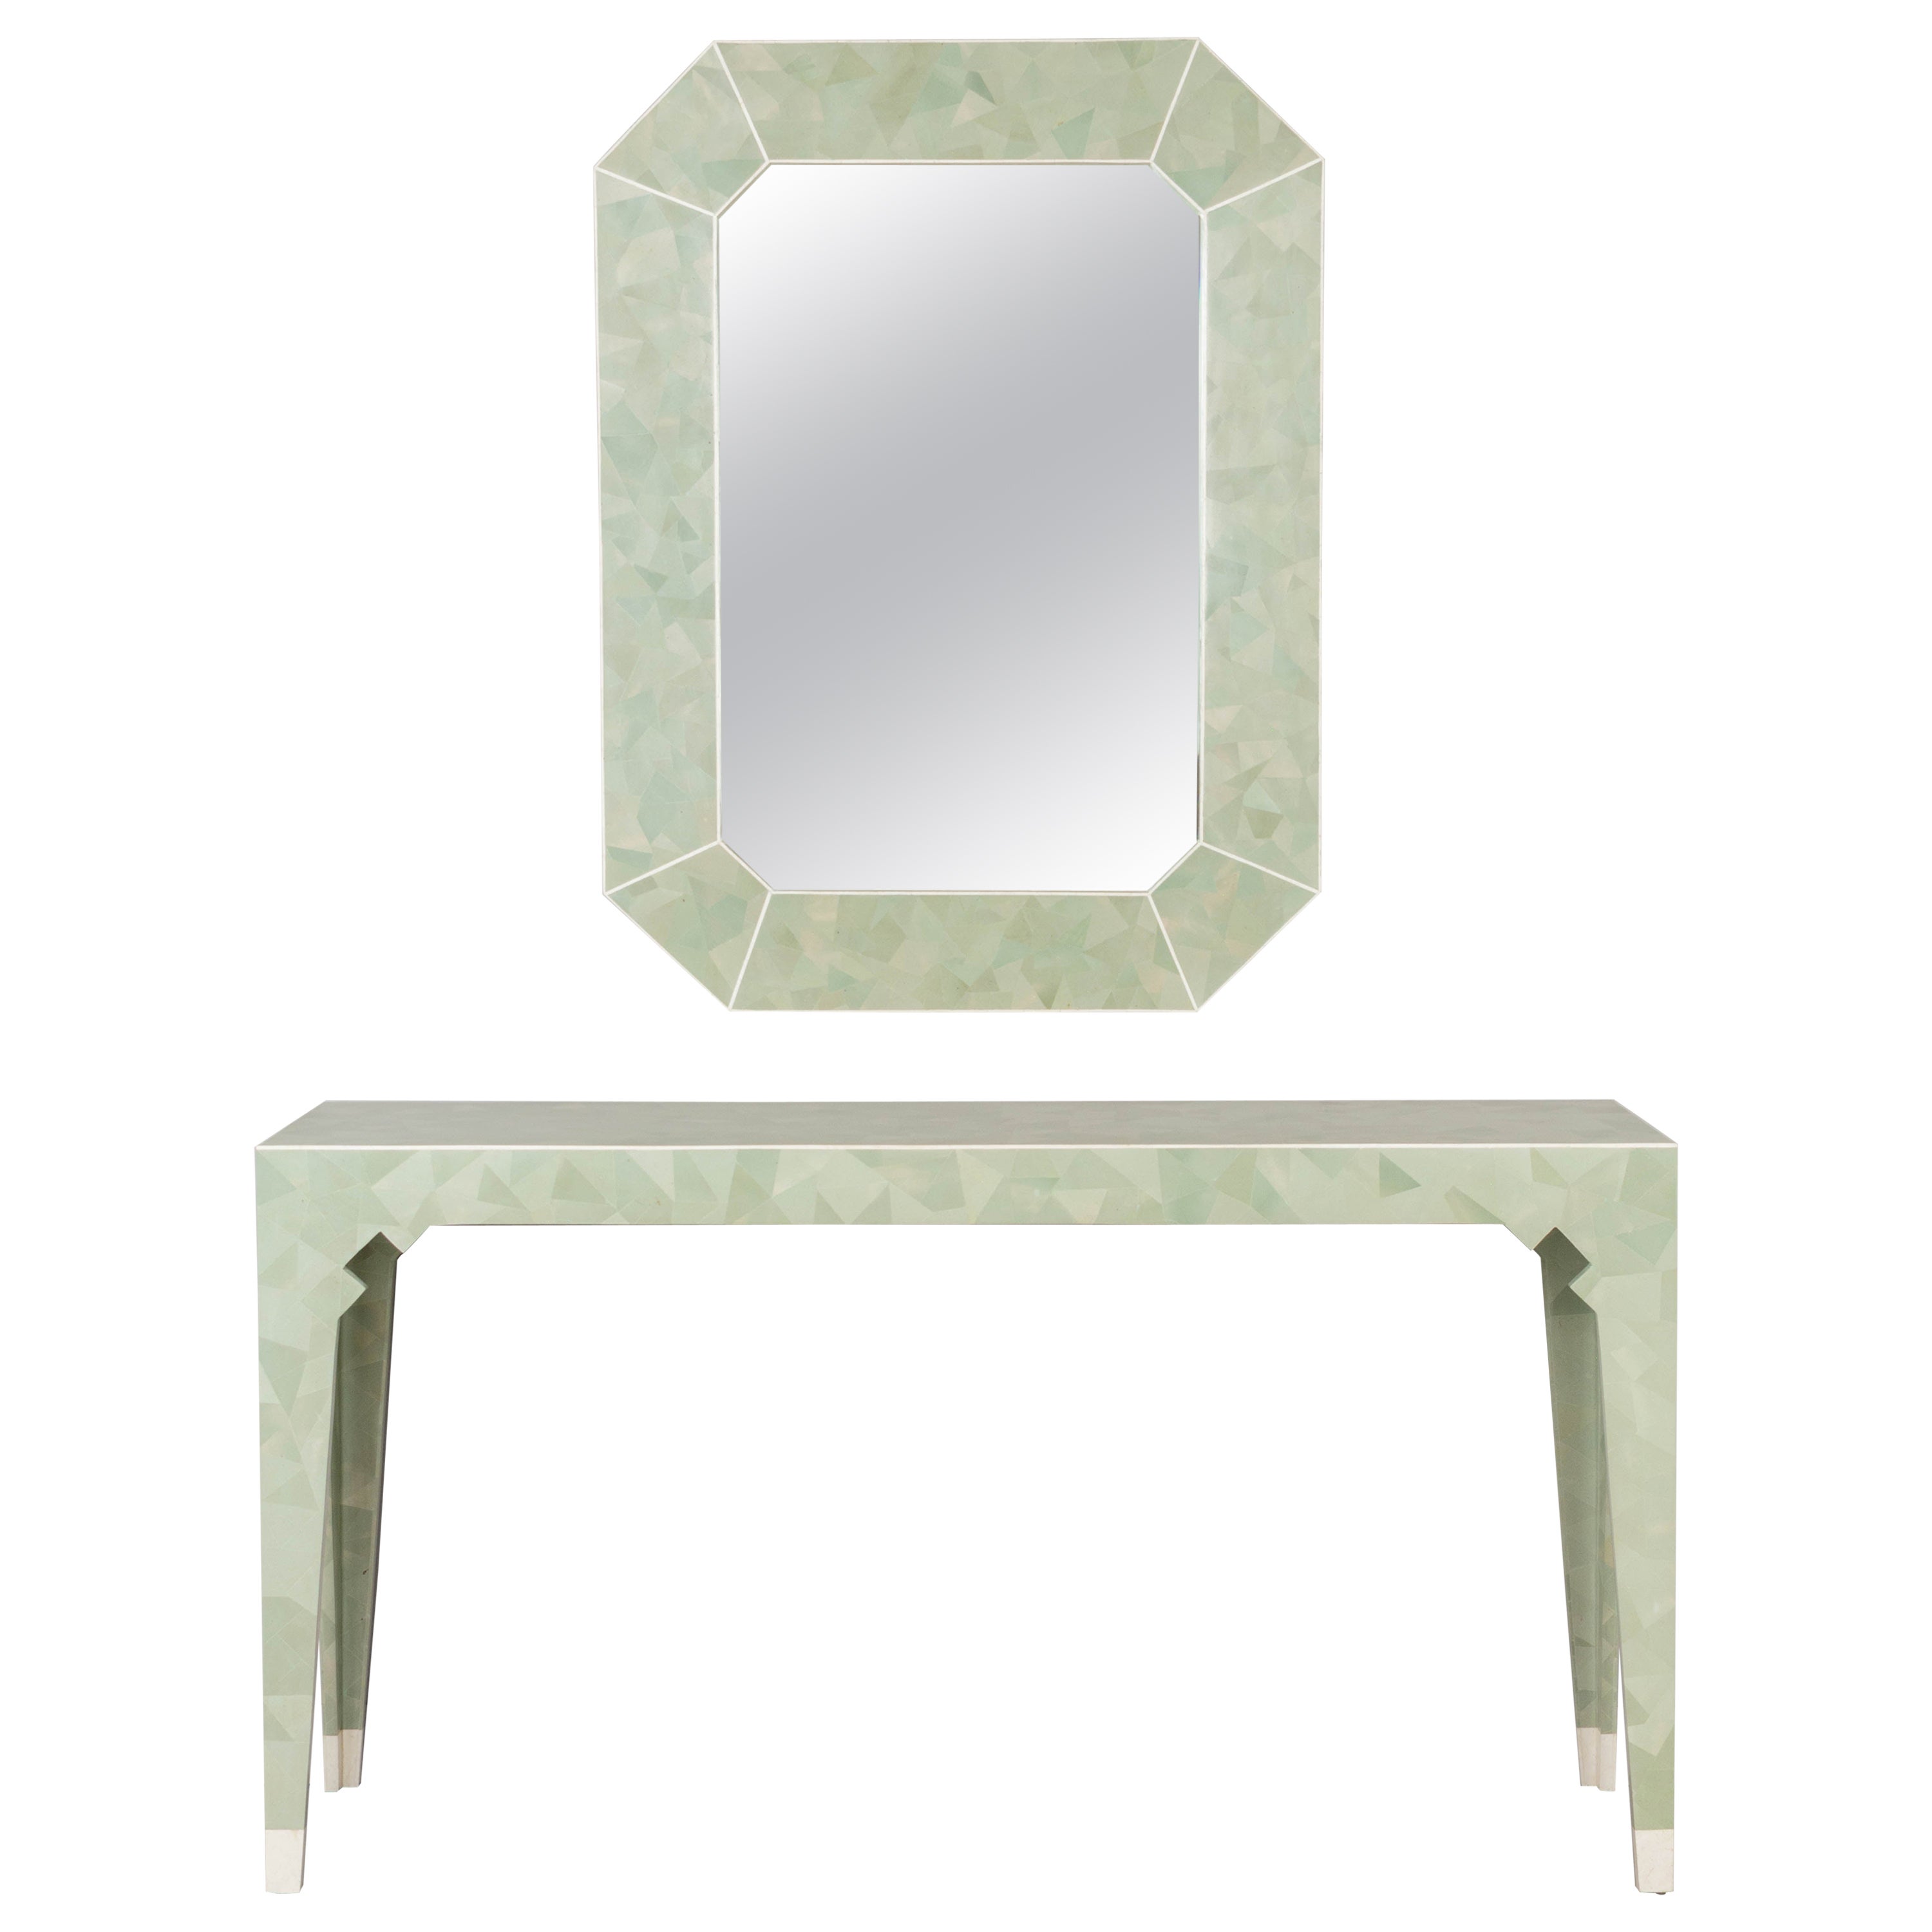 Oggetti Tessellated Stone Console Table & Mirror For Sale